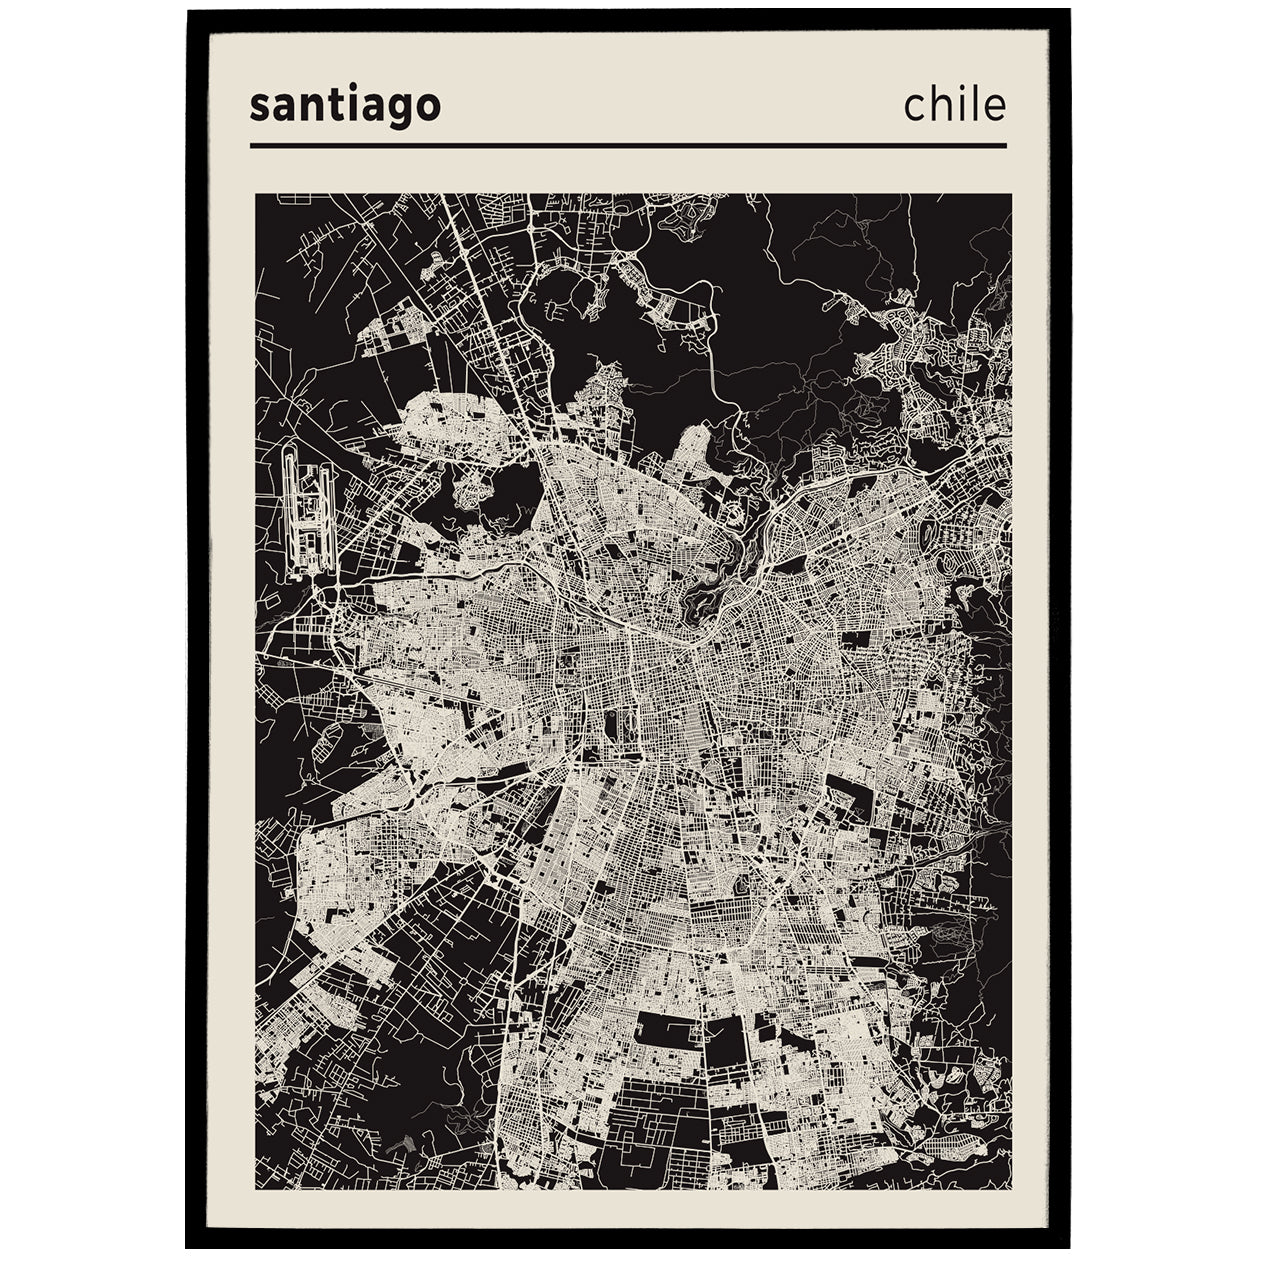 Santiago, Chile - City Map Poster Print